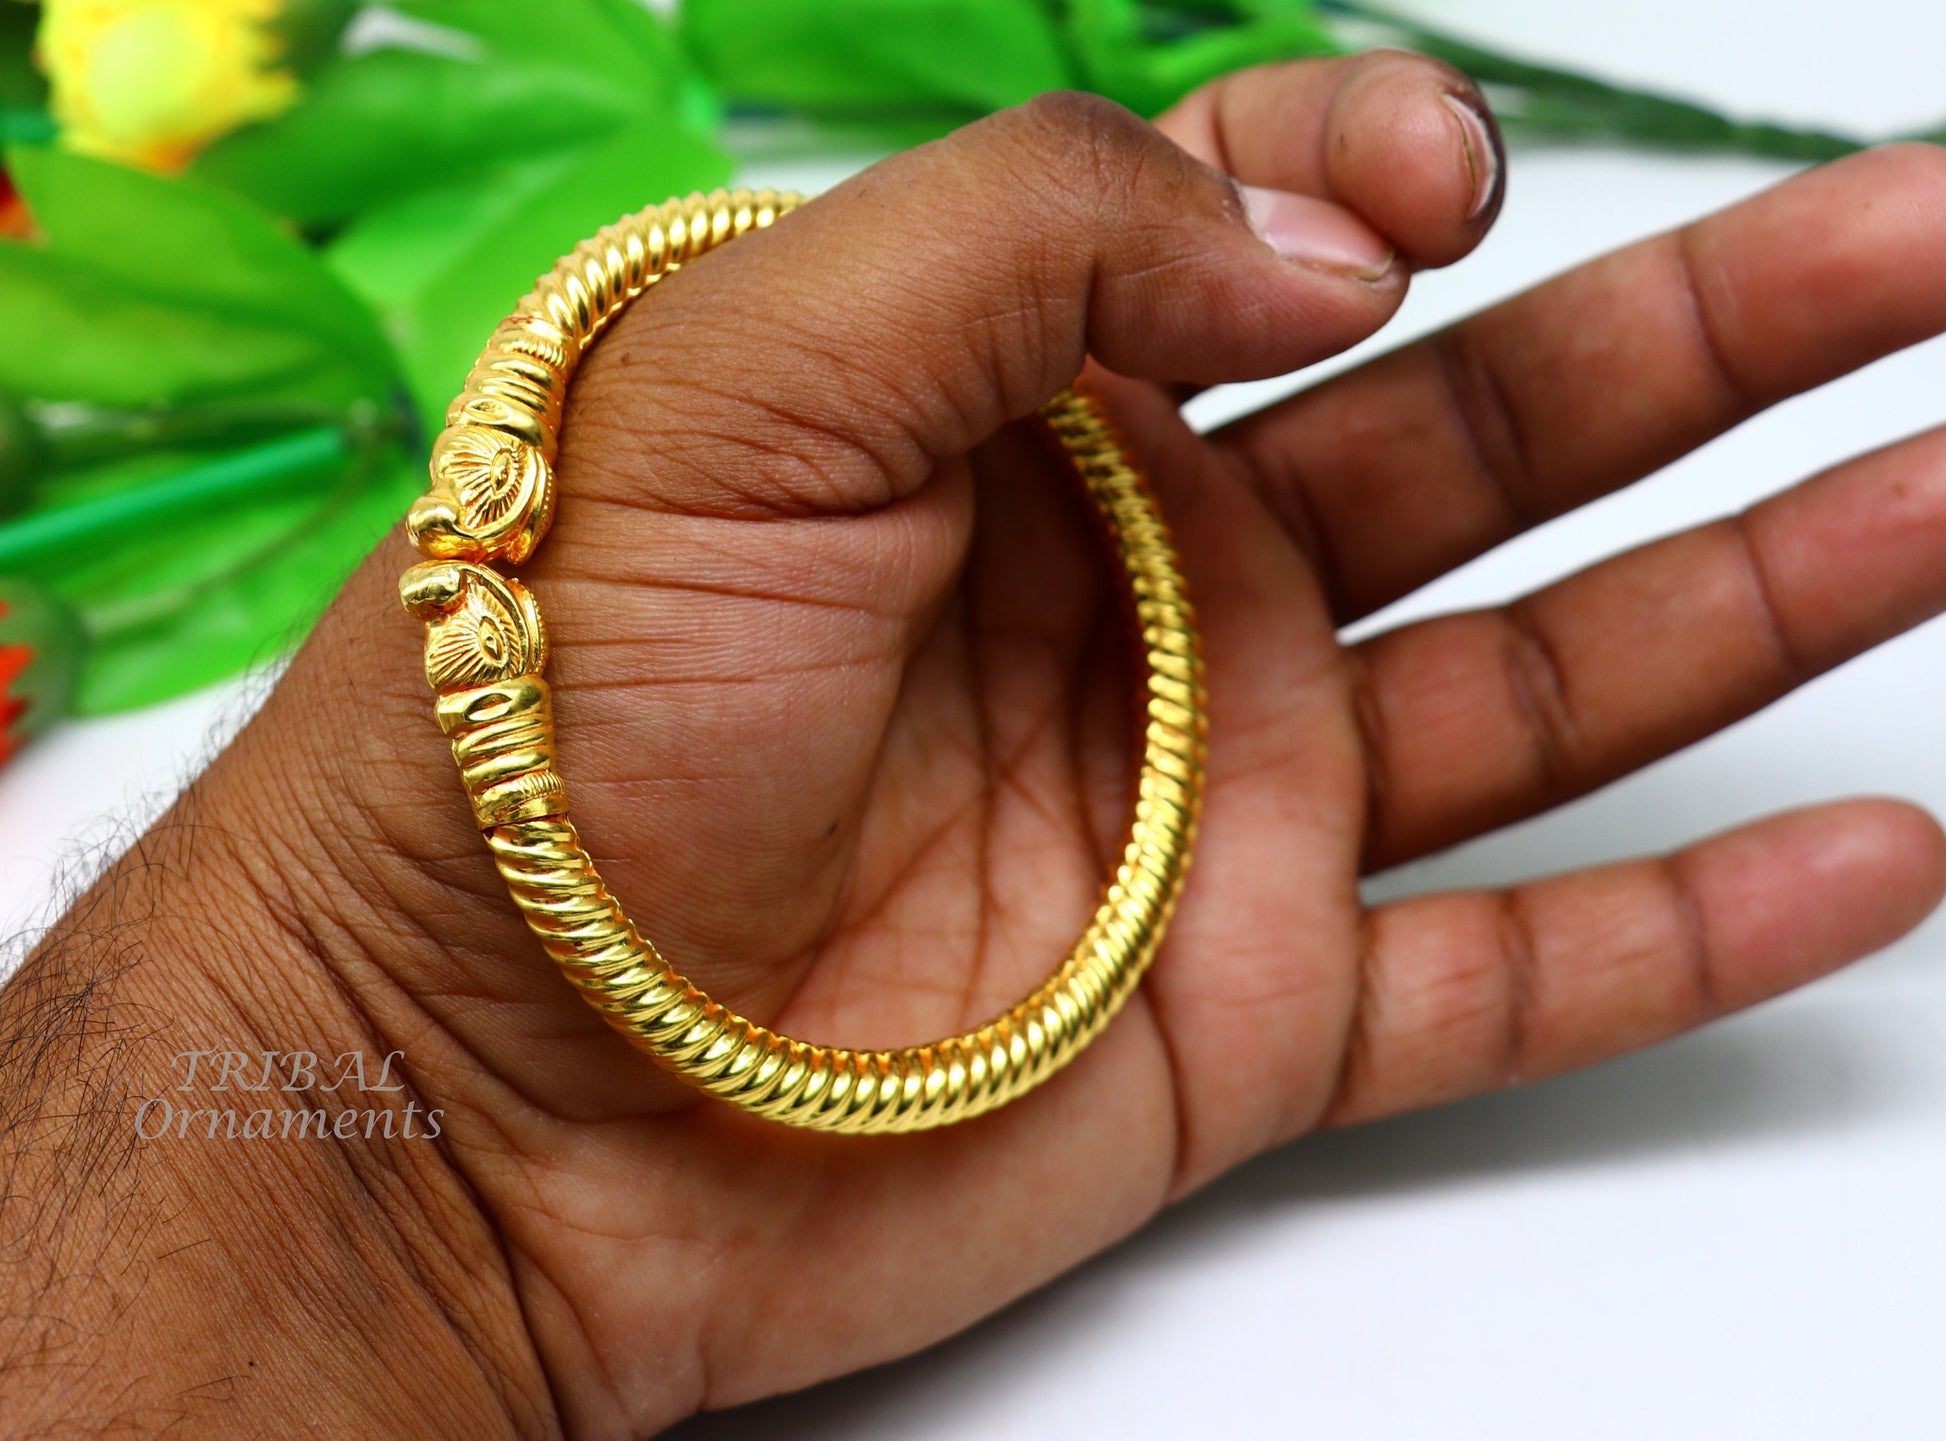 22 kt yellow gold handmade customized vintage elephant design stylish kada bangle bracelet, best gifting for wedding anniversary gift gk02 - TRIBAL ORNAMENTS